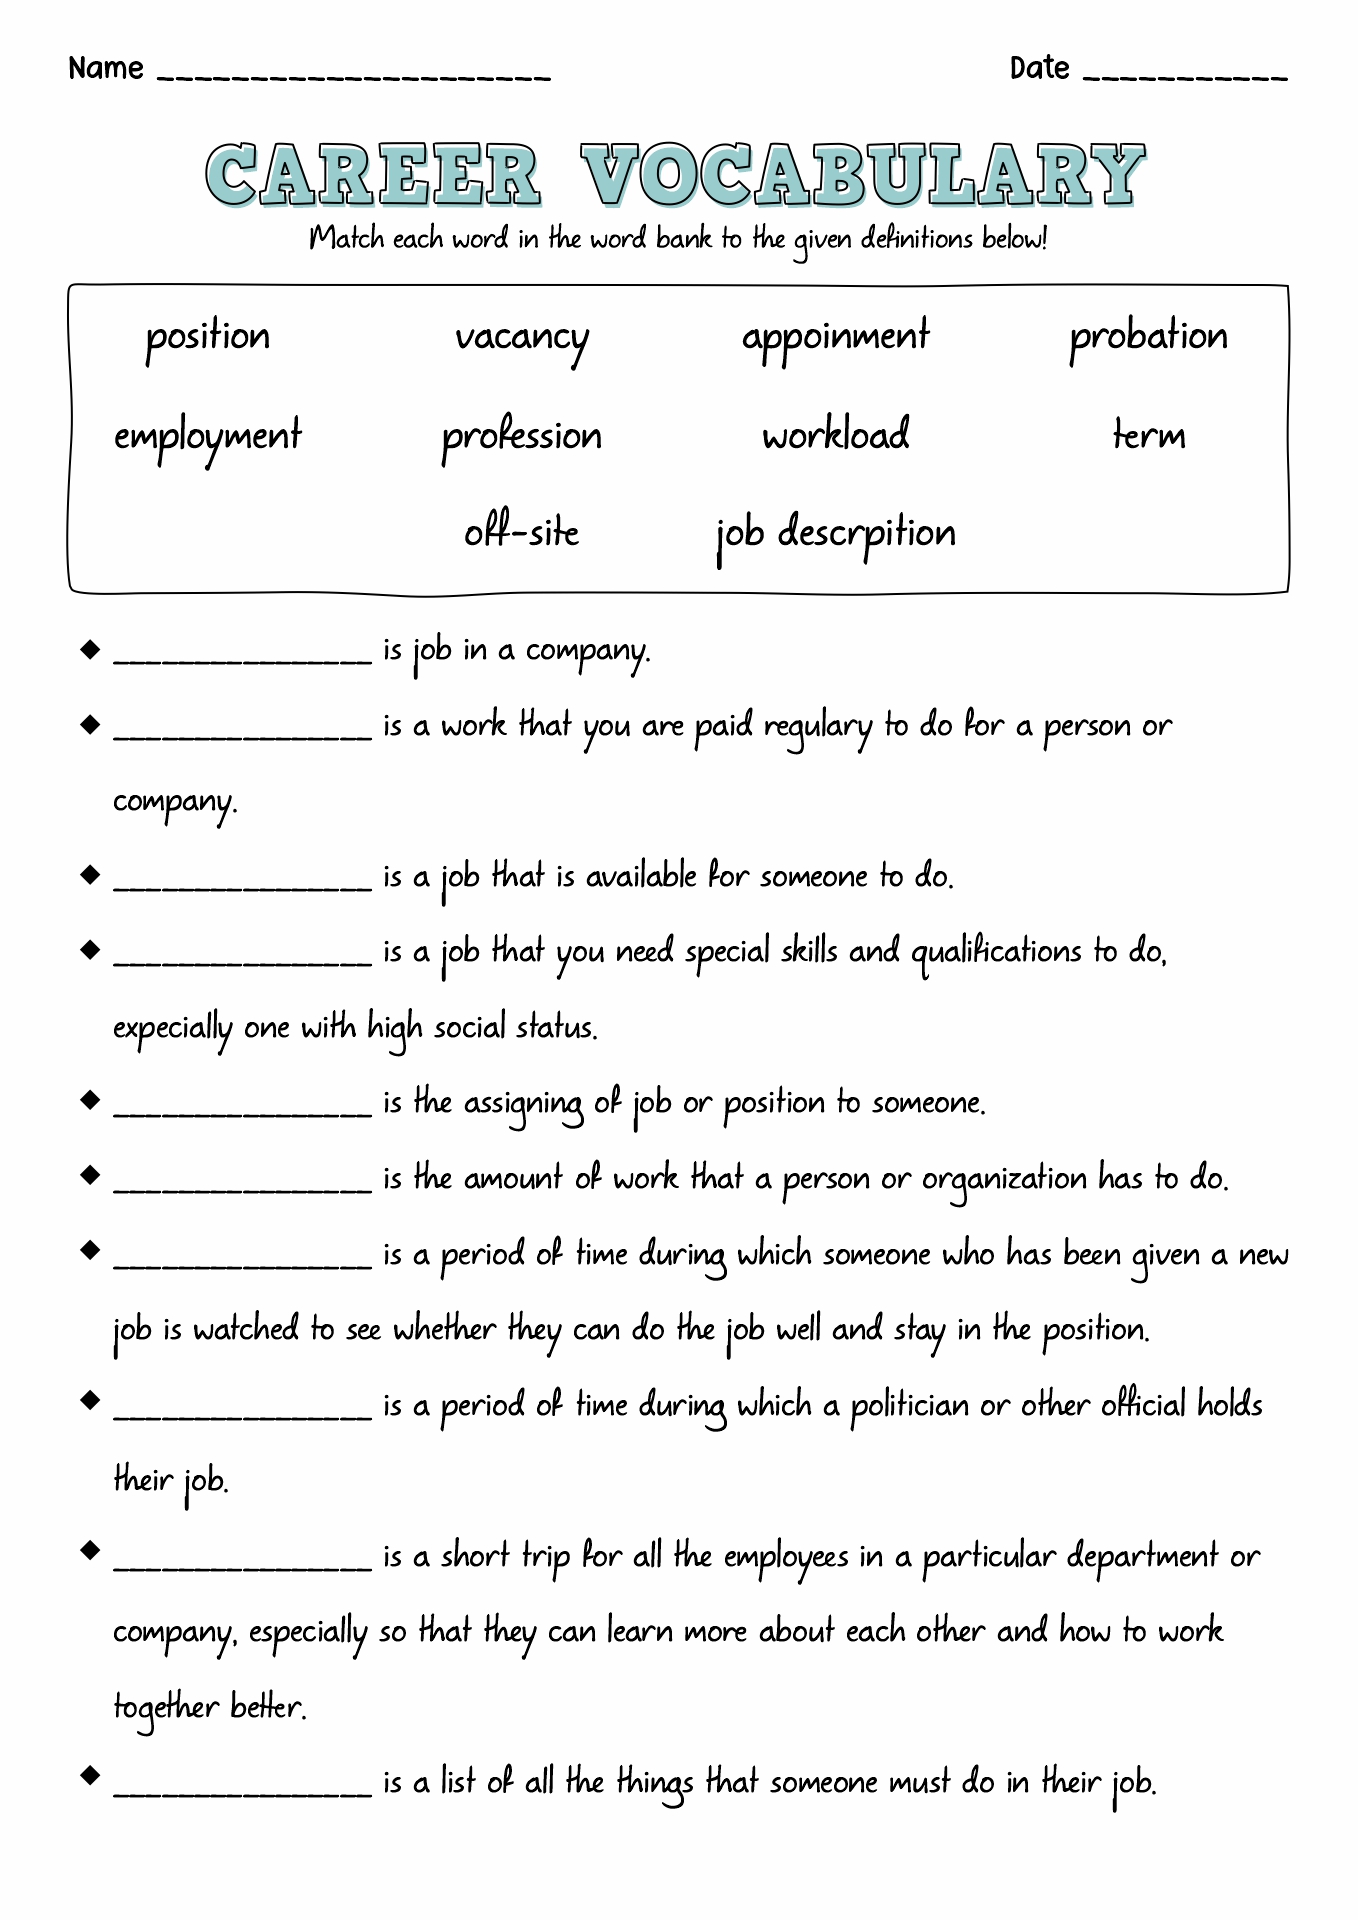 Career Vocabulary Worksheets Image